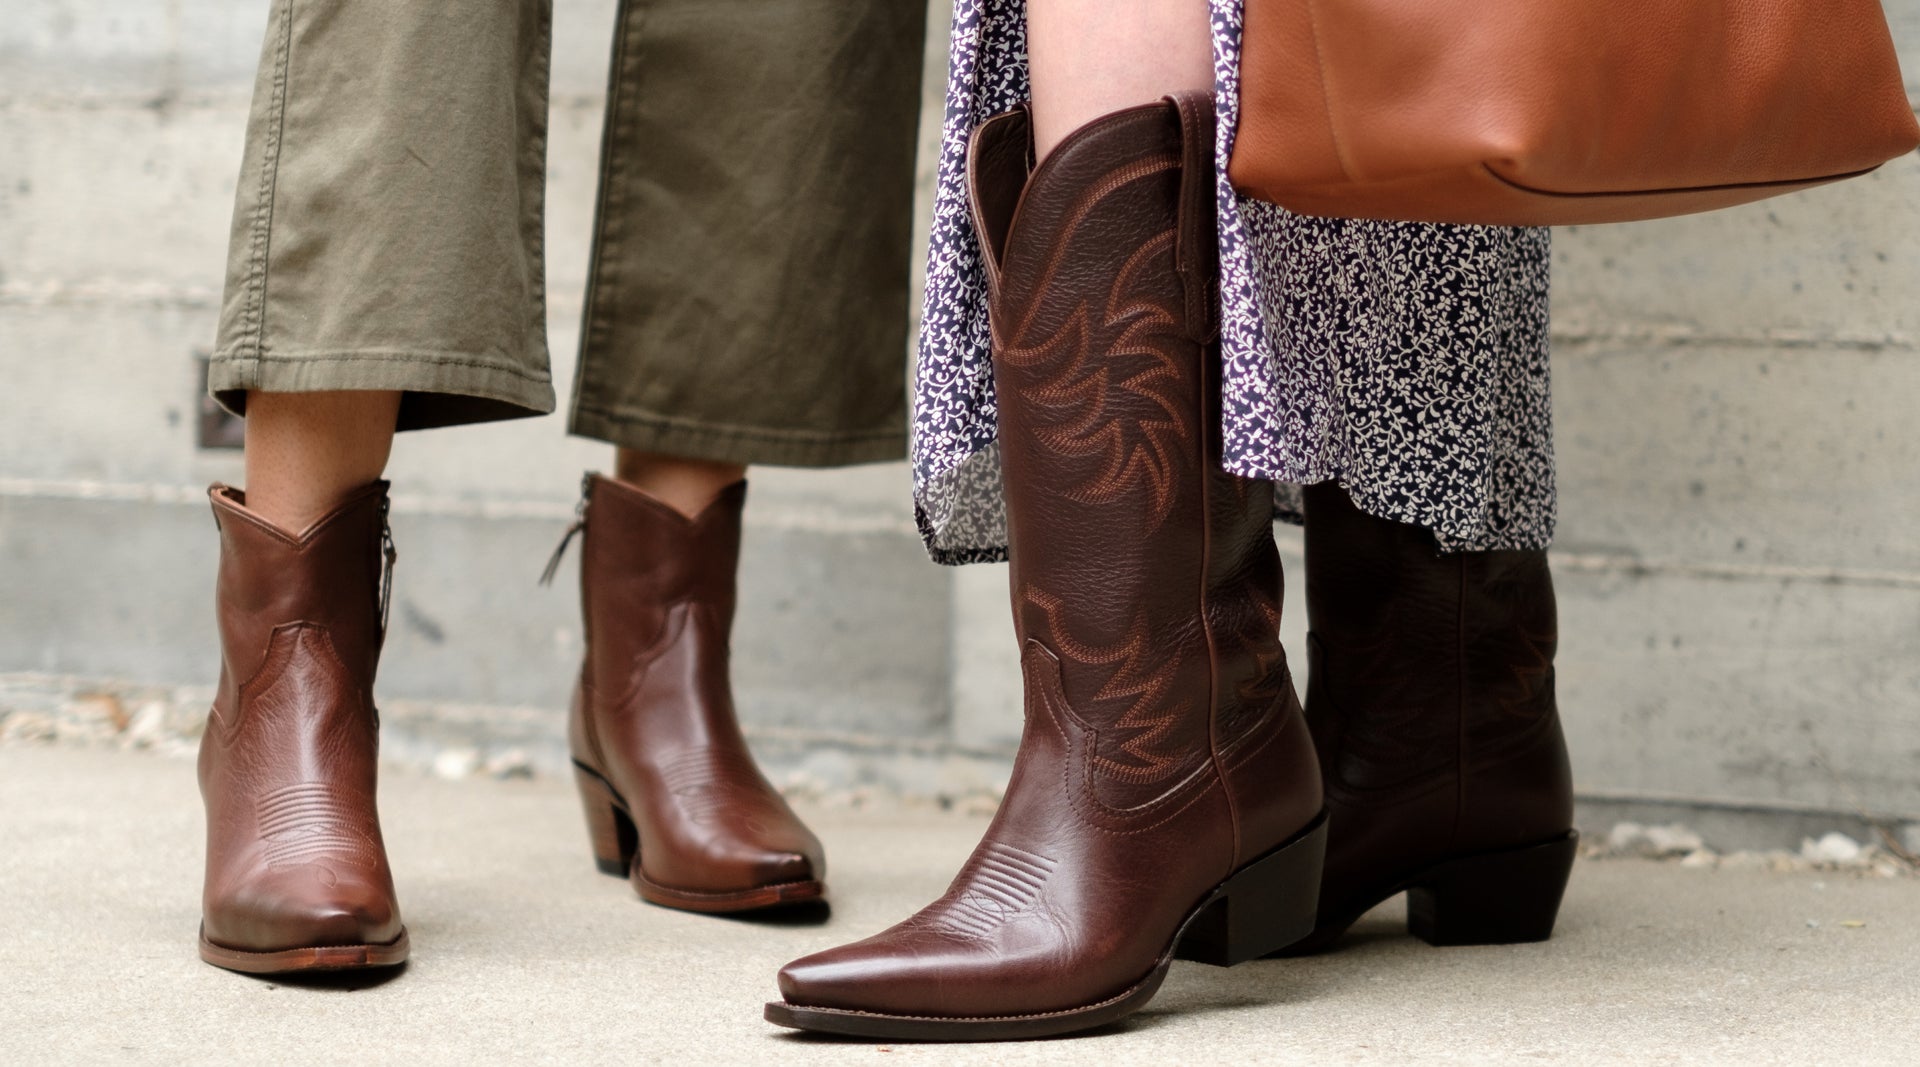 tecovas boots ladies